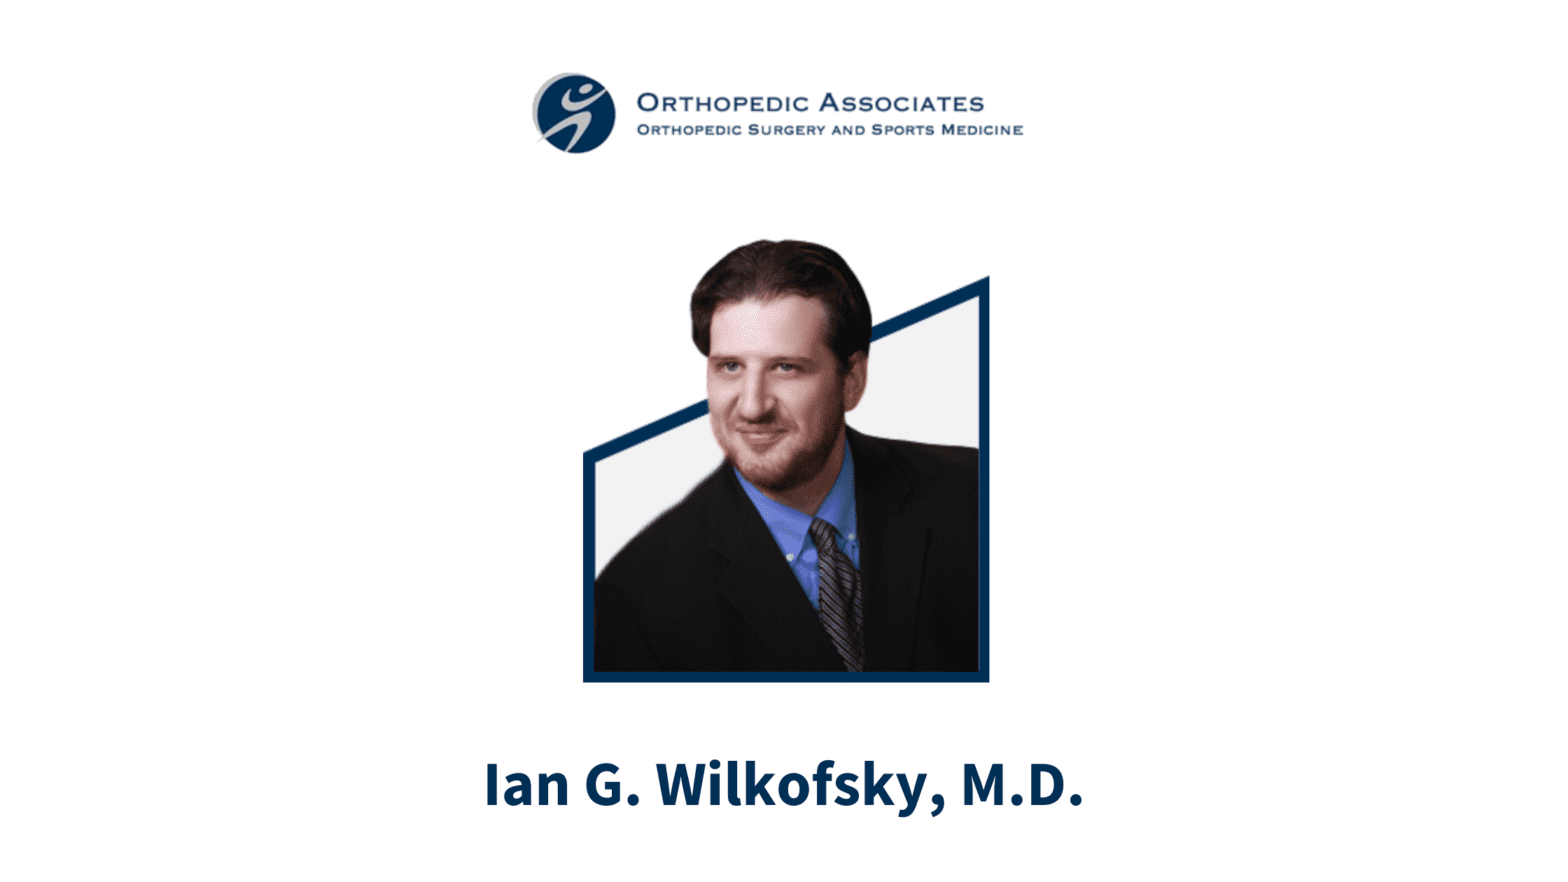 Orthopedic Surgeon, Ian G. Wilkofsky, M.D.